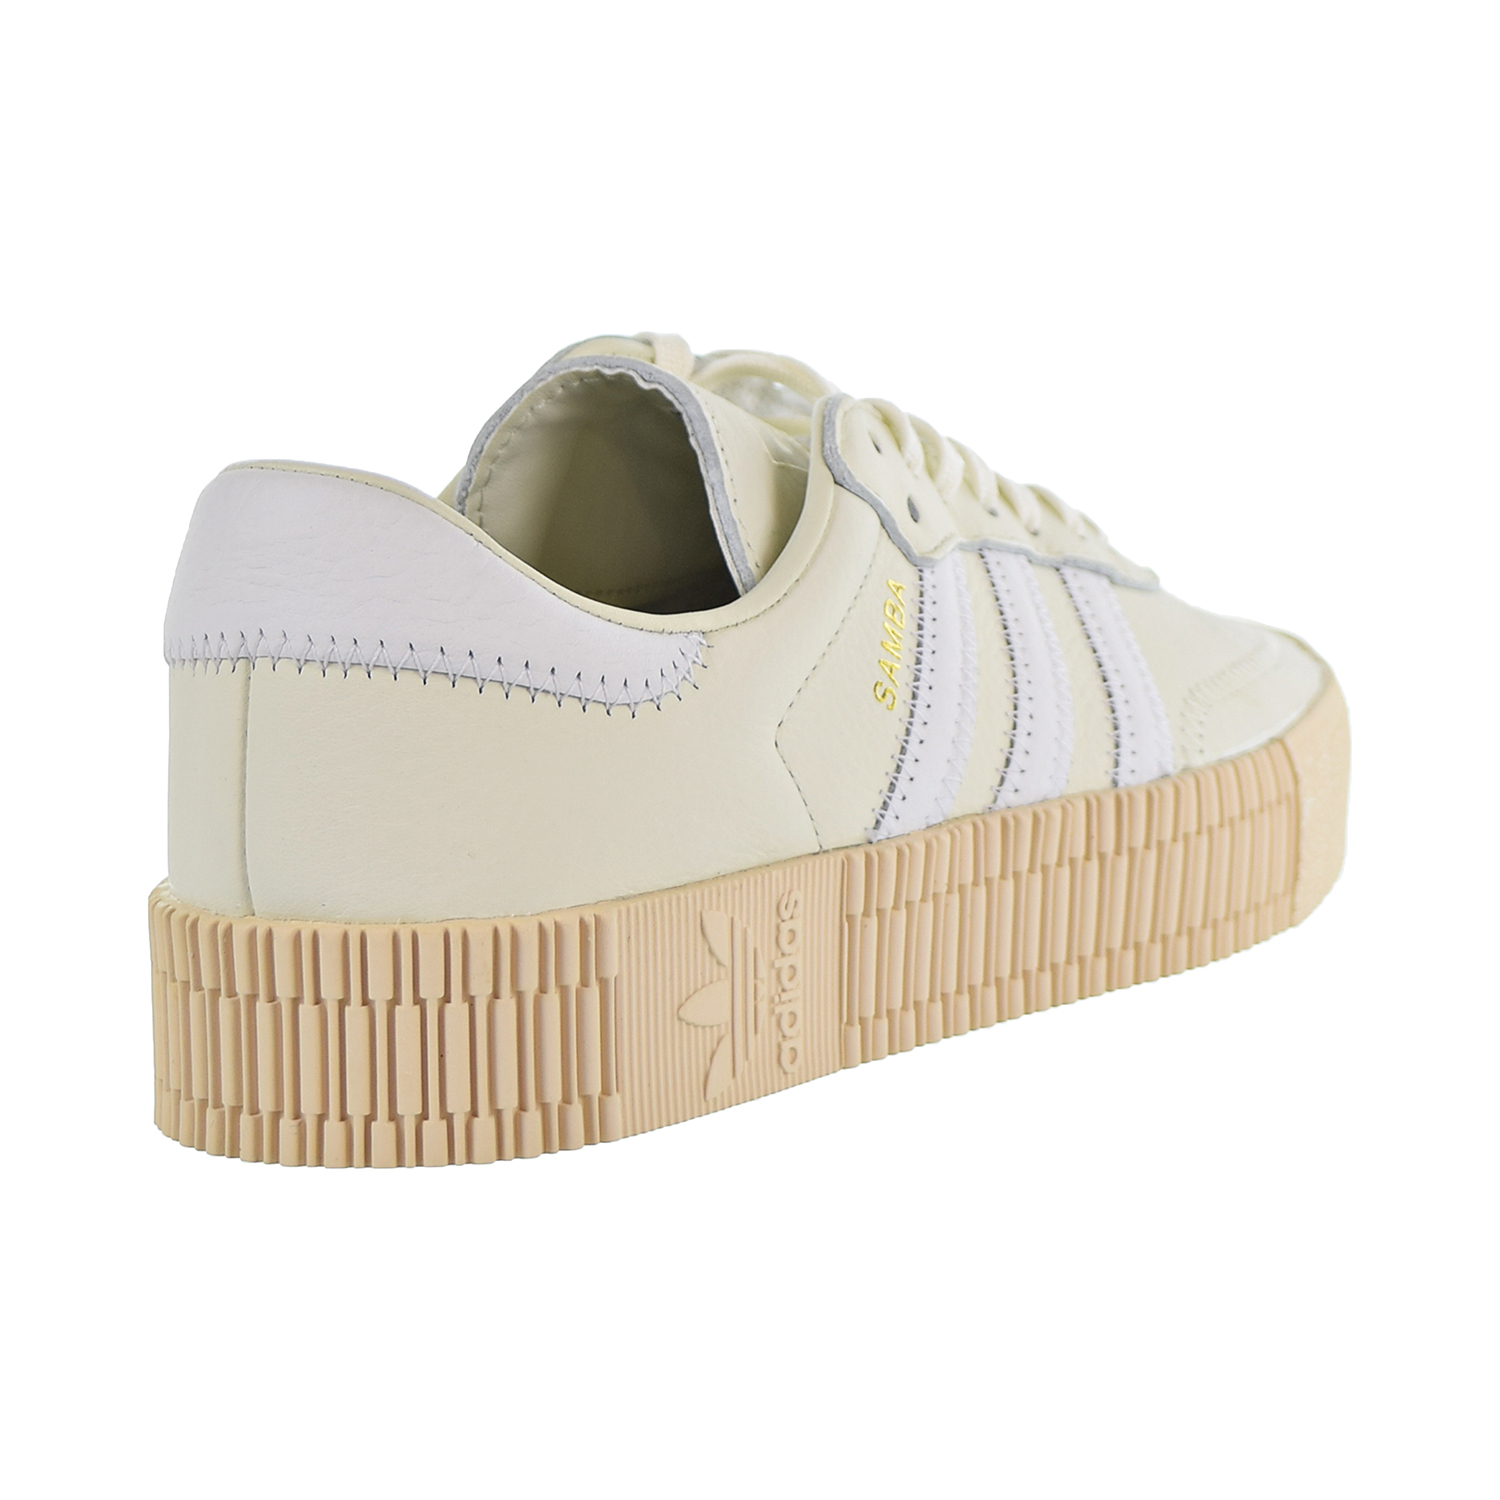 Adidas Sambarose Women's Shoes Off White-Cloud White-Linen b28167